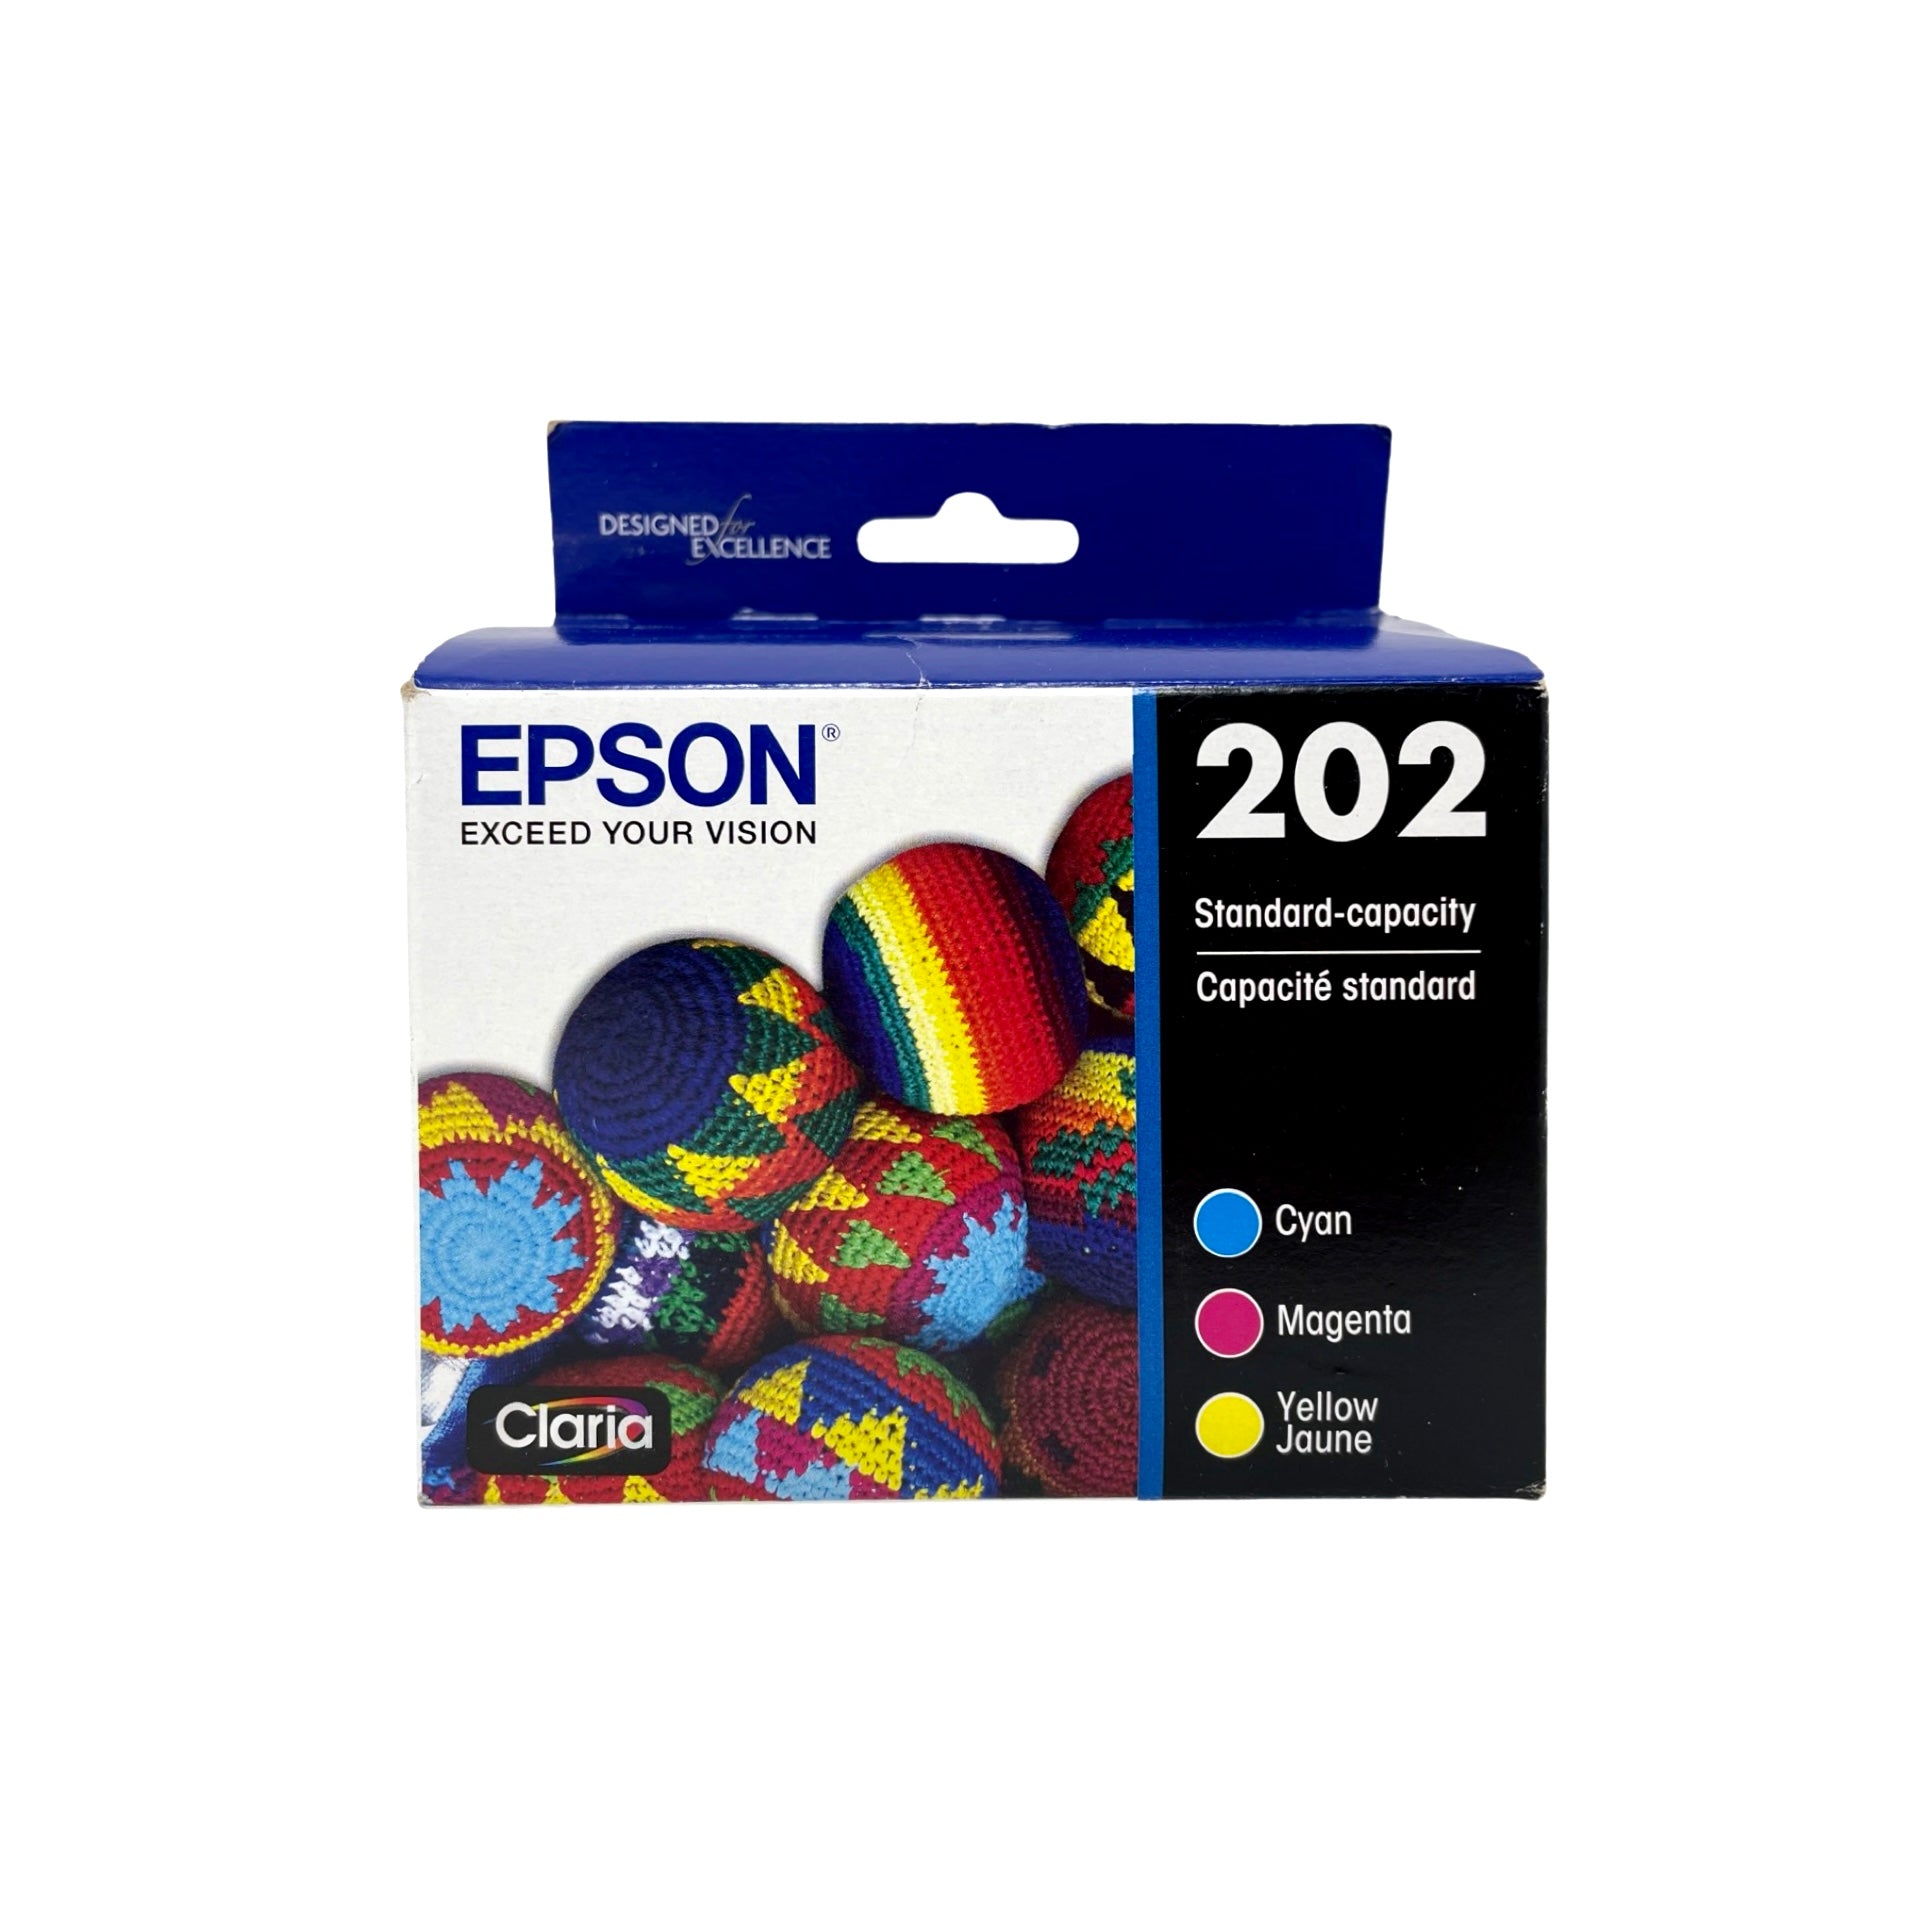 Epson 202 3-Pack Standard Capacity Cyan/Magenta/Yellow Ink Cartridges (T202520-S)